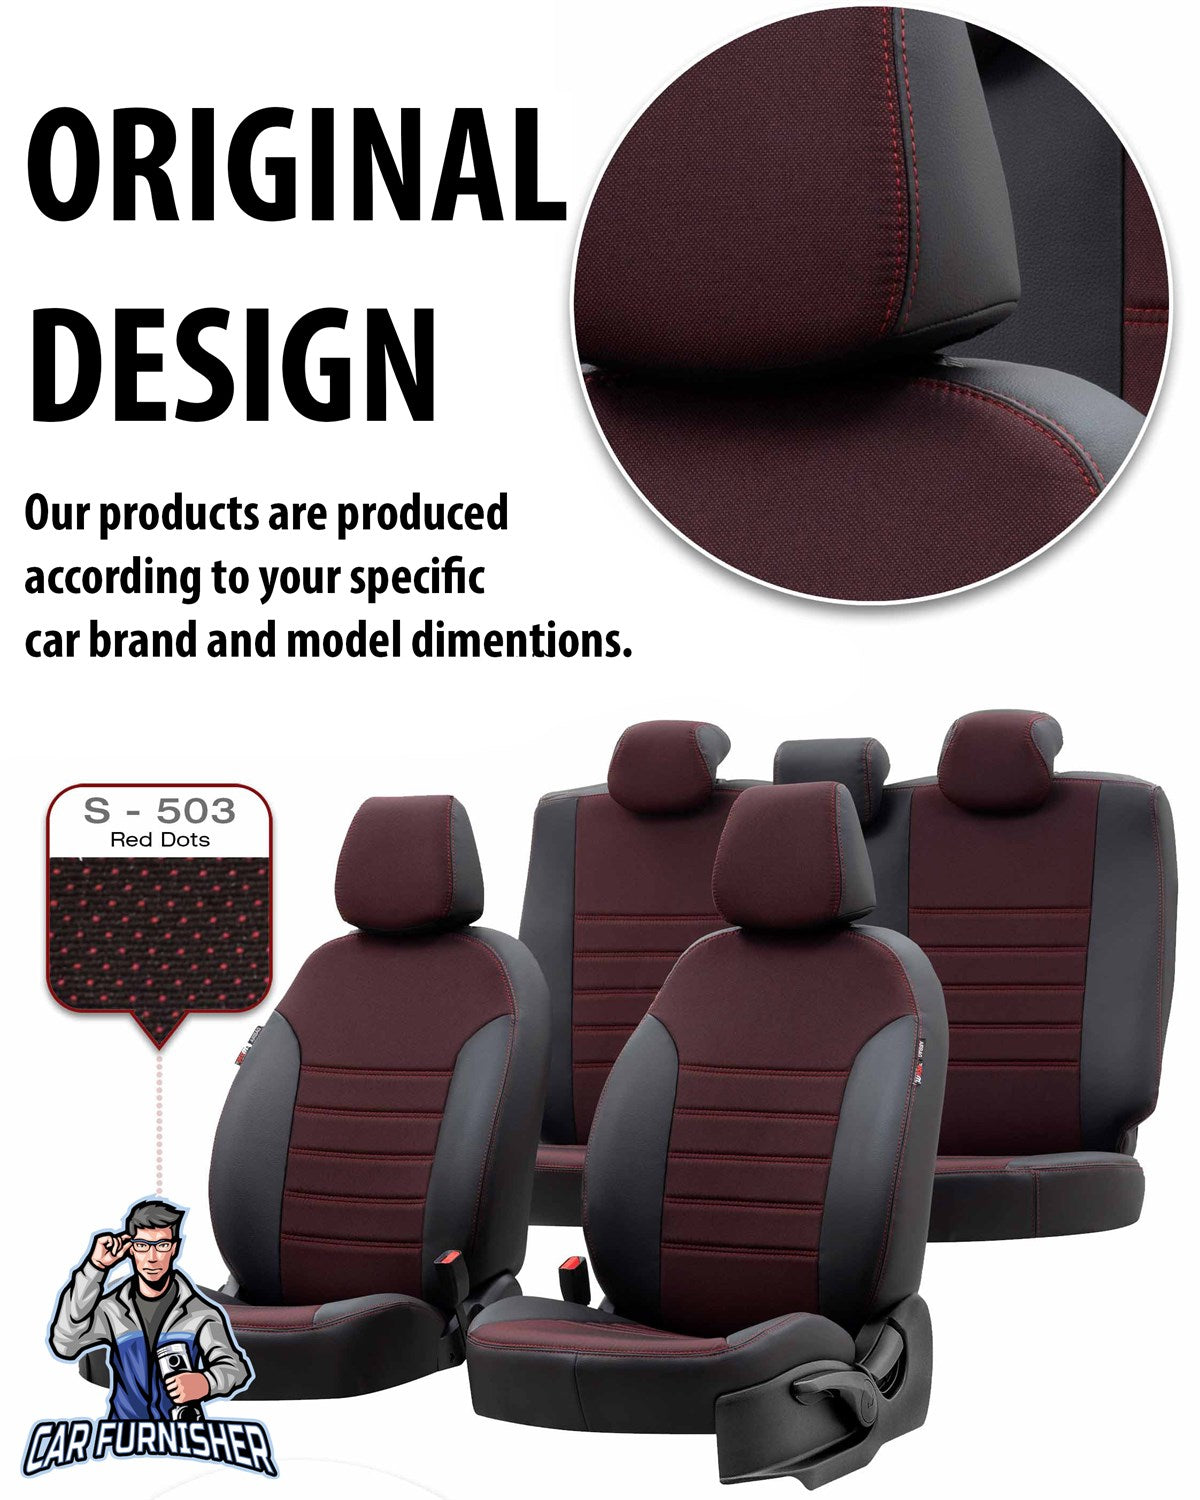 Volvo V60 Seat Cover Paris Leather & Jacquard Design Red Leather & Jacquard Fabric